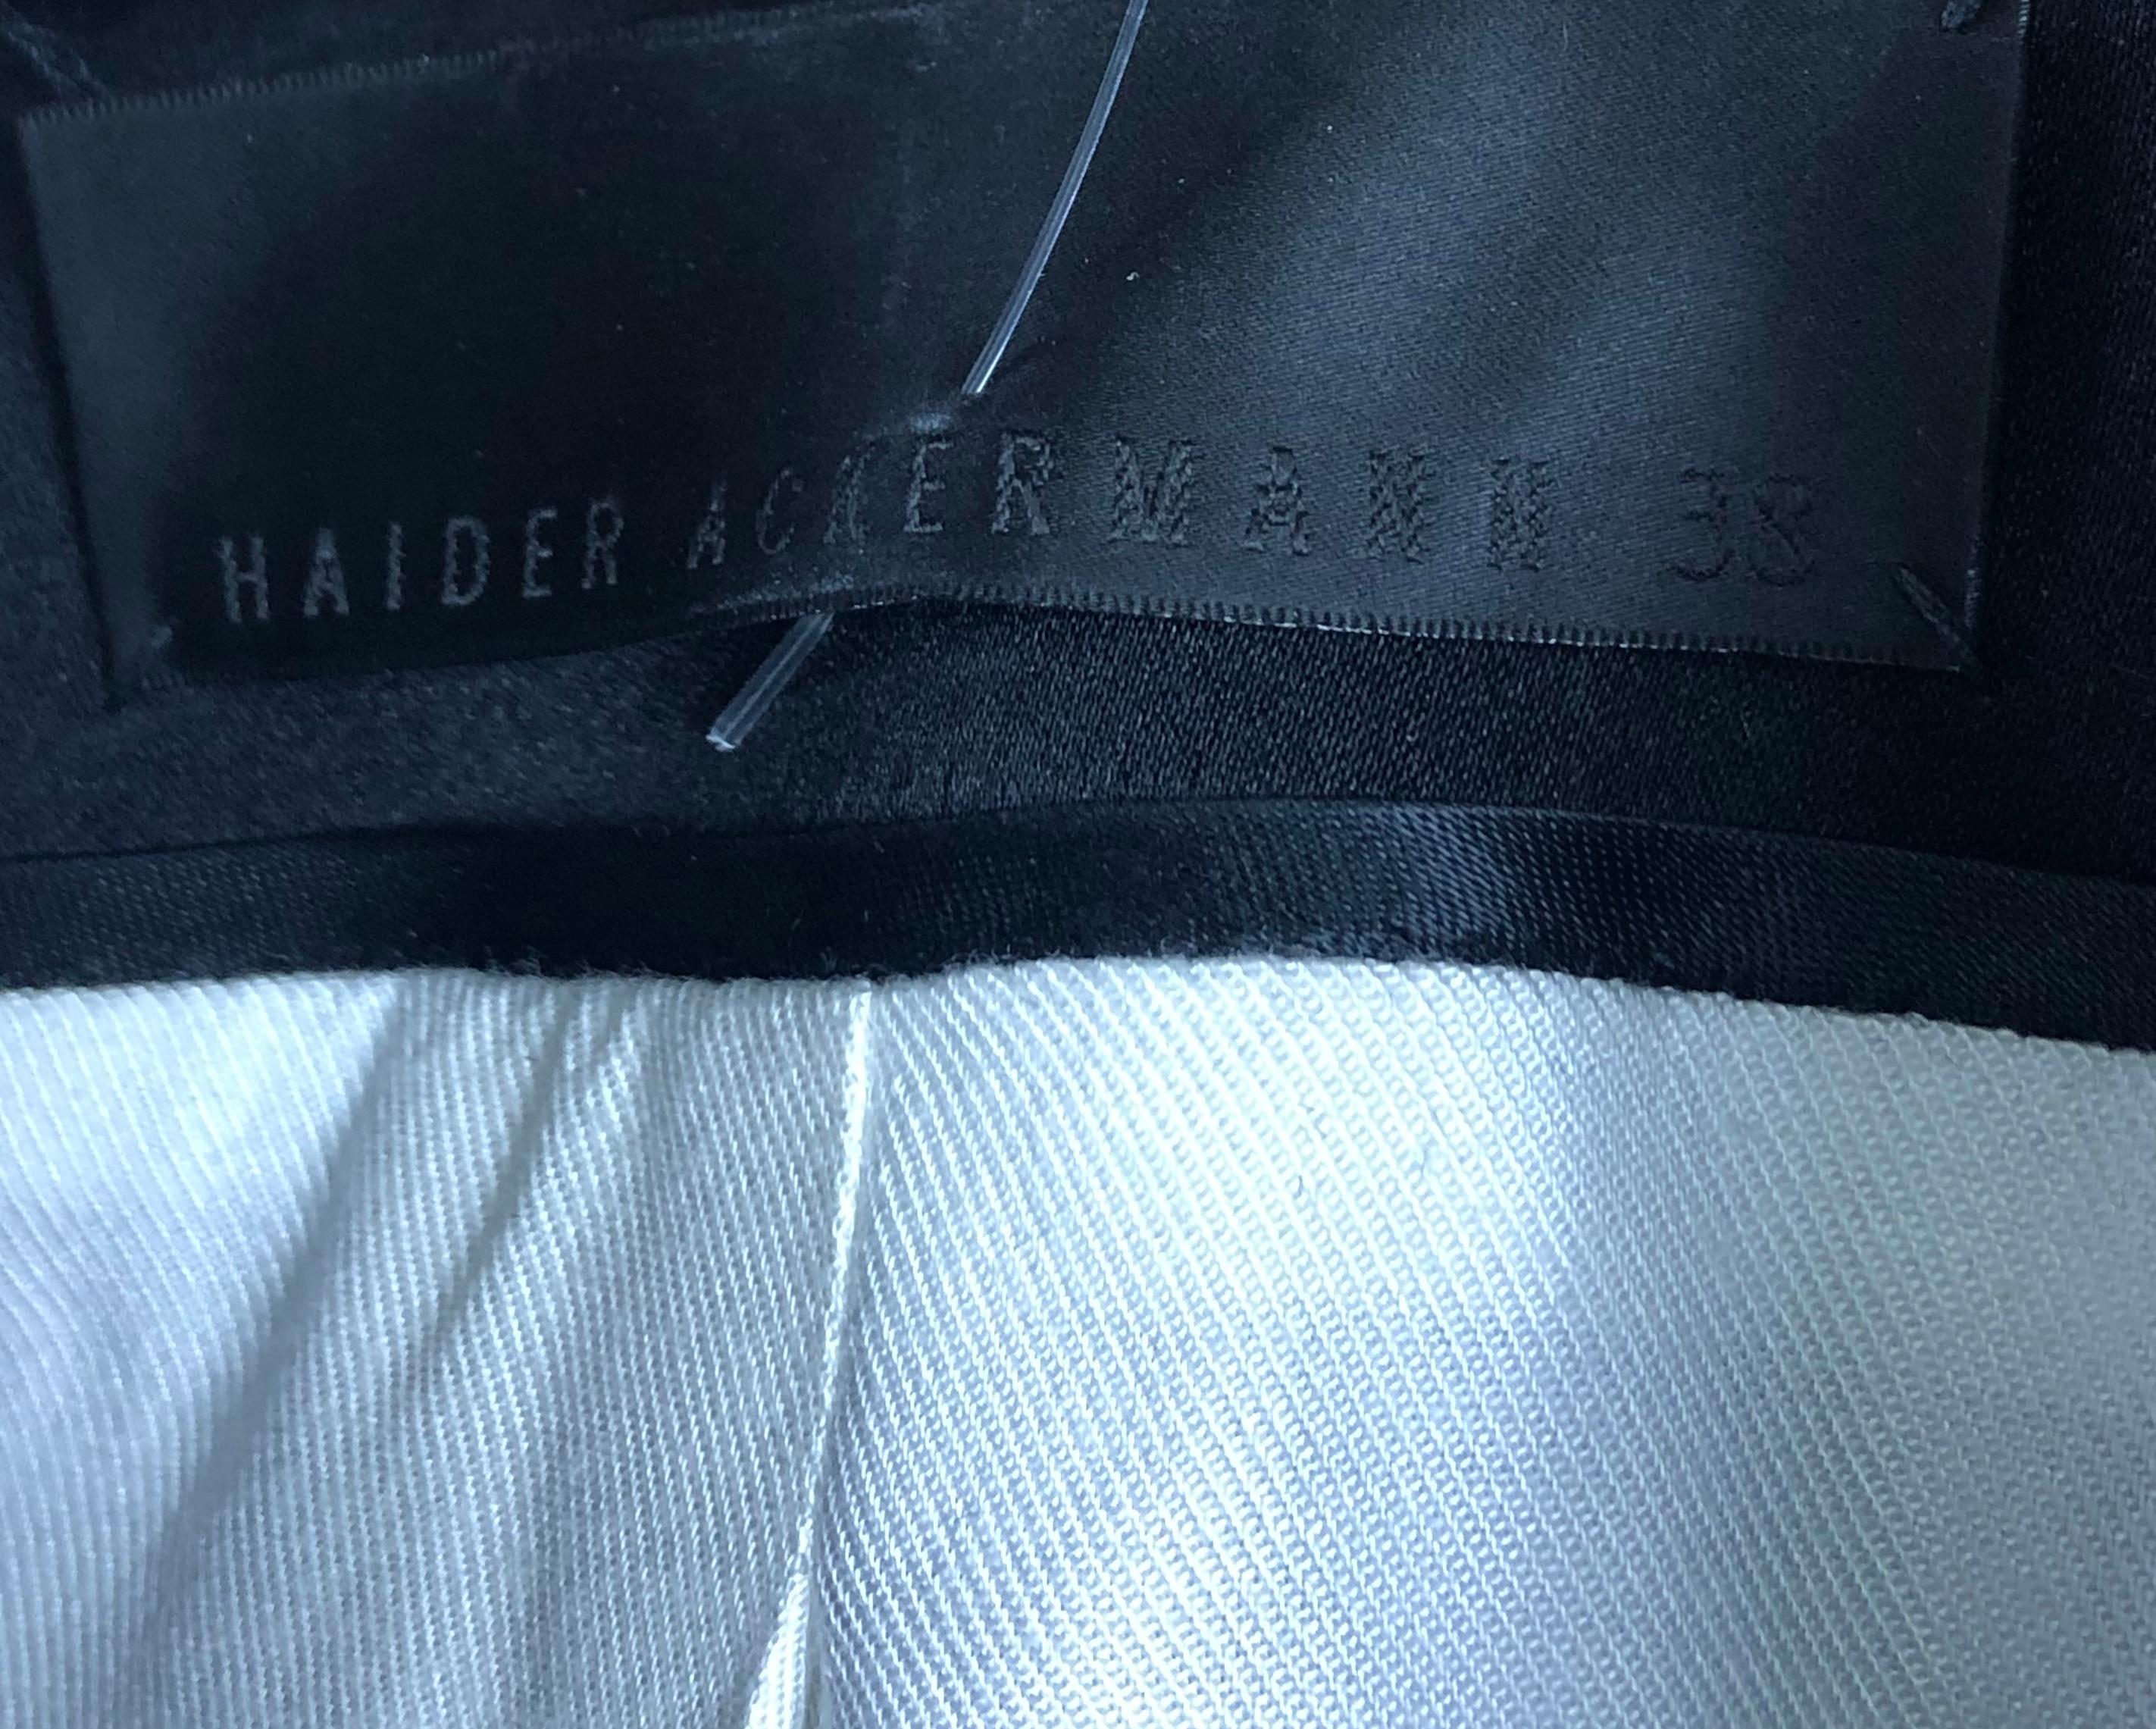 Haider Ackermann - Blazer de smoking bleu marine et noir, taille 38 en vente 2